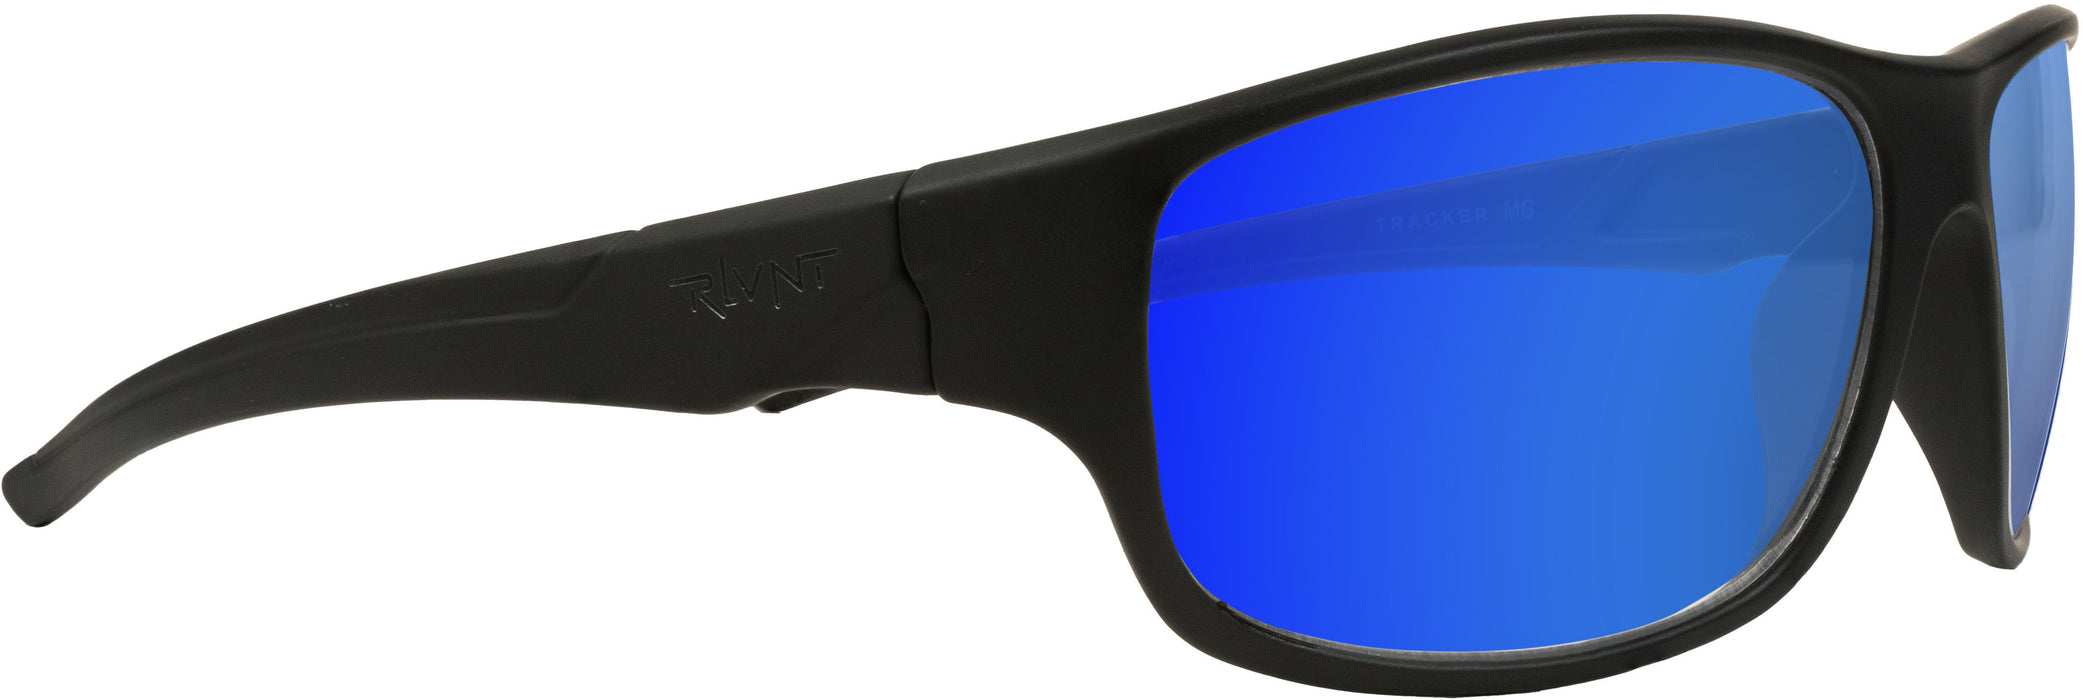 RLVNT Tracker Series Sunglasses